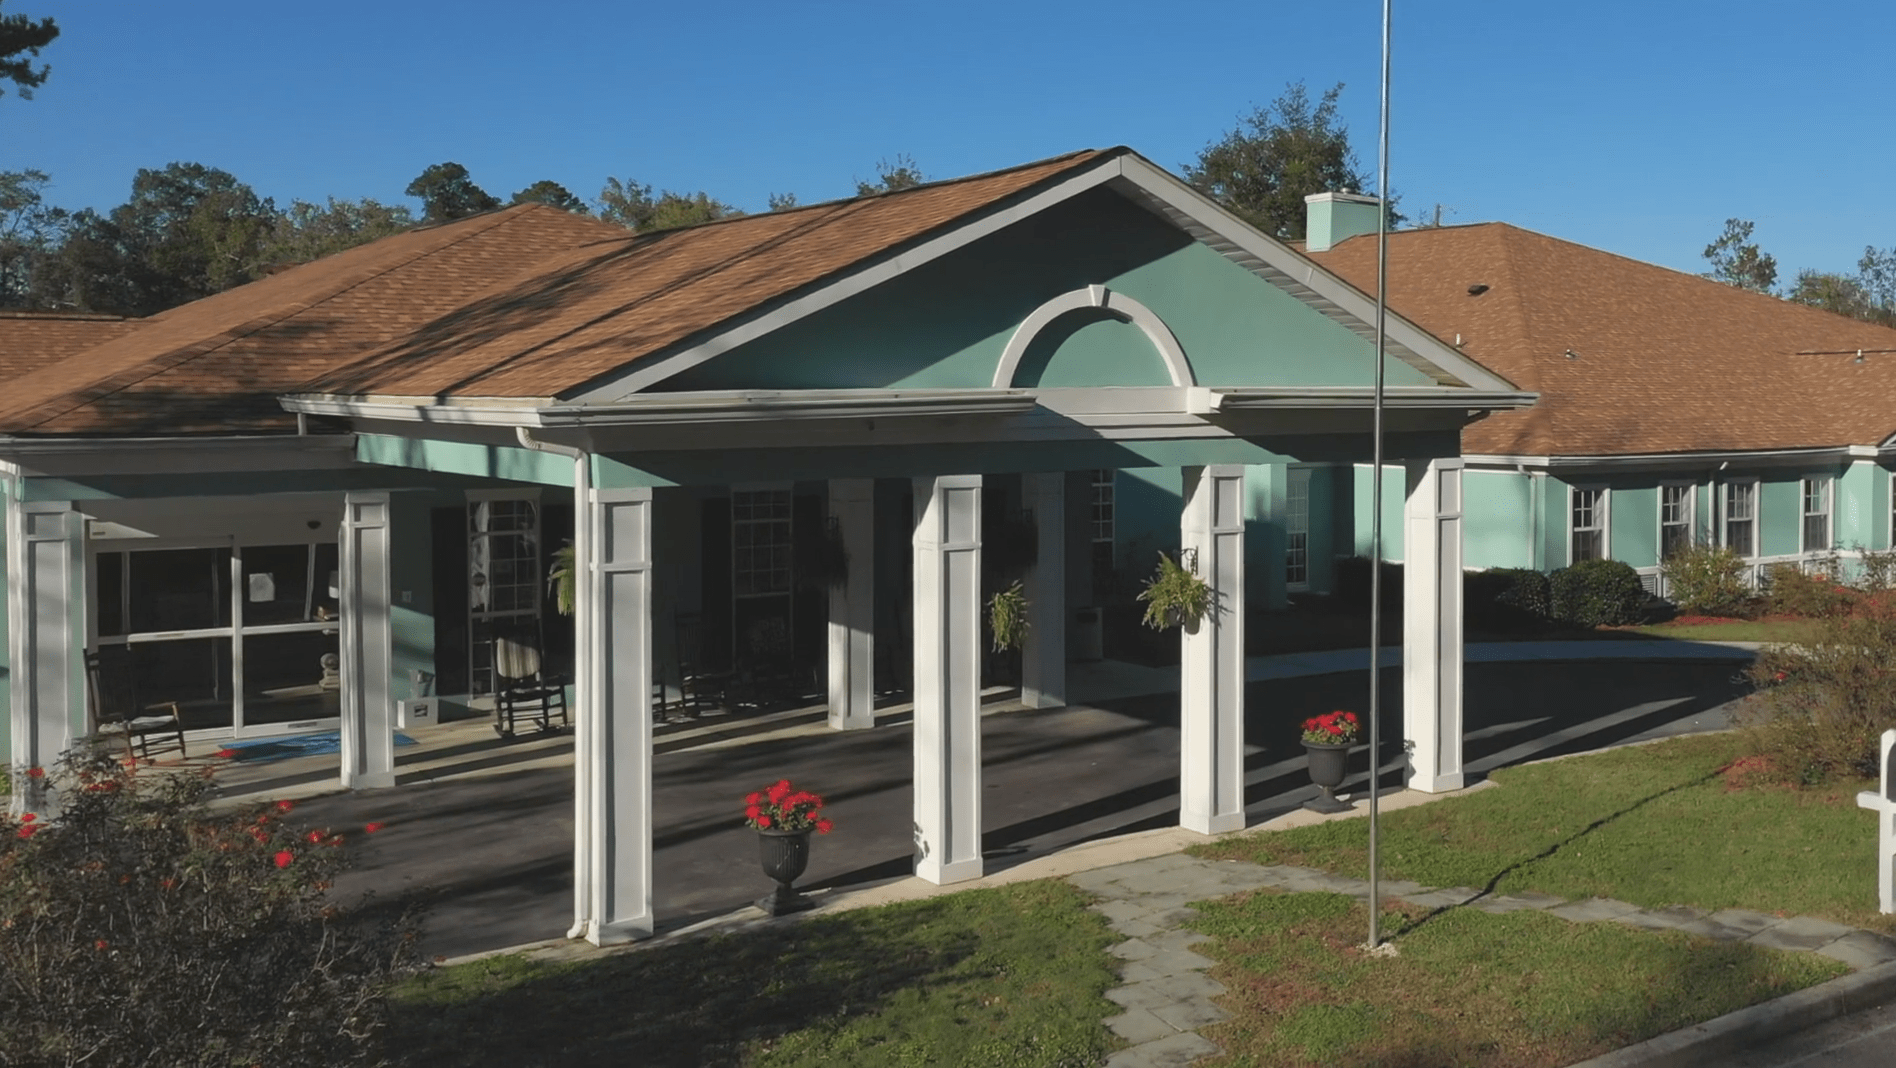 The Retreat at Summerville community exterior